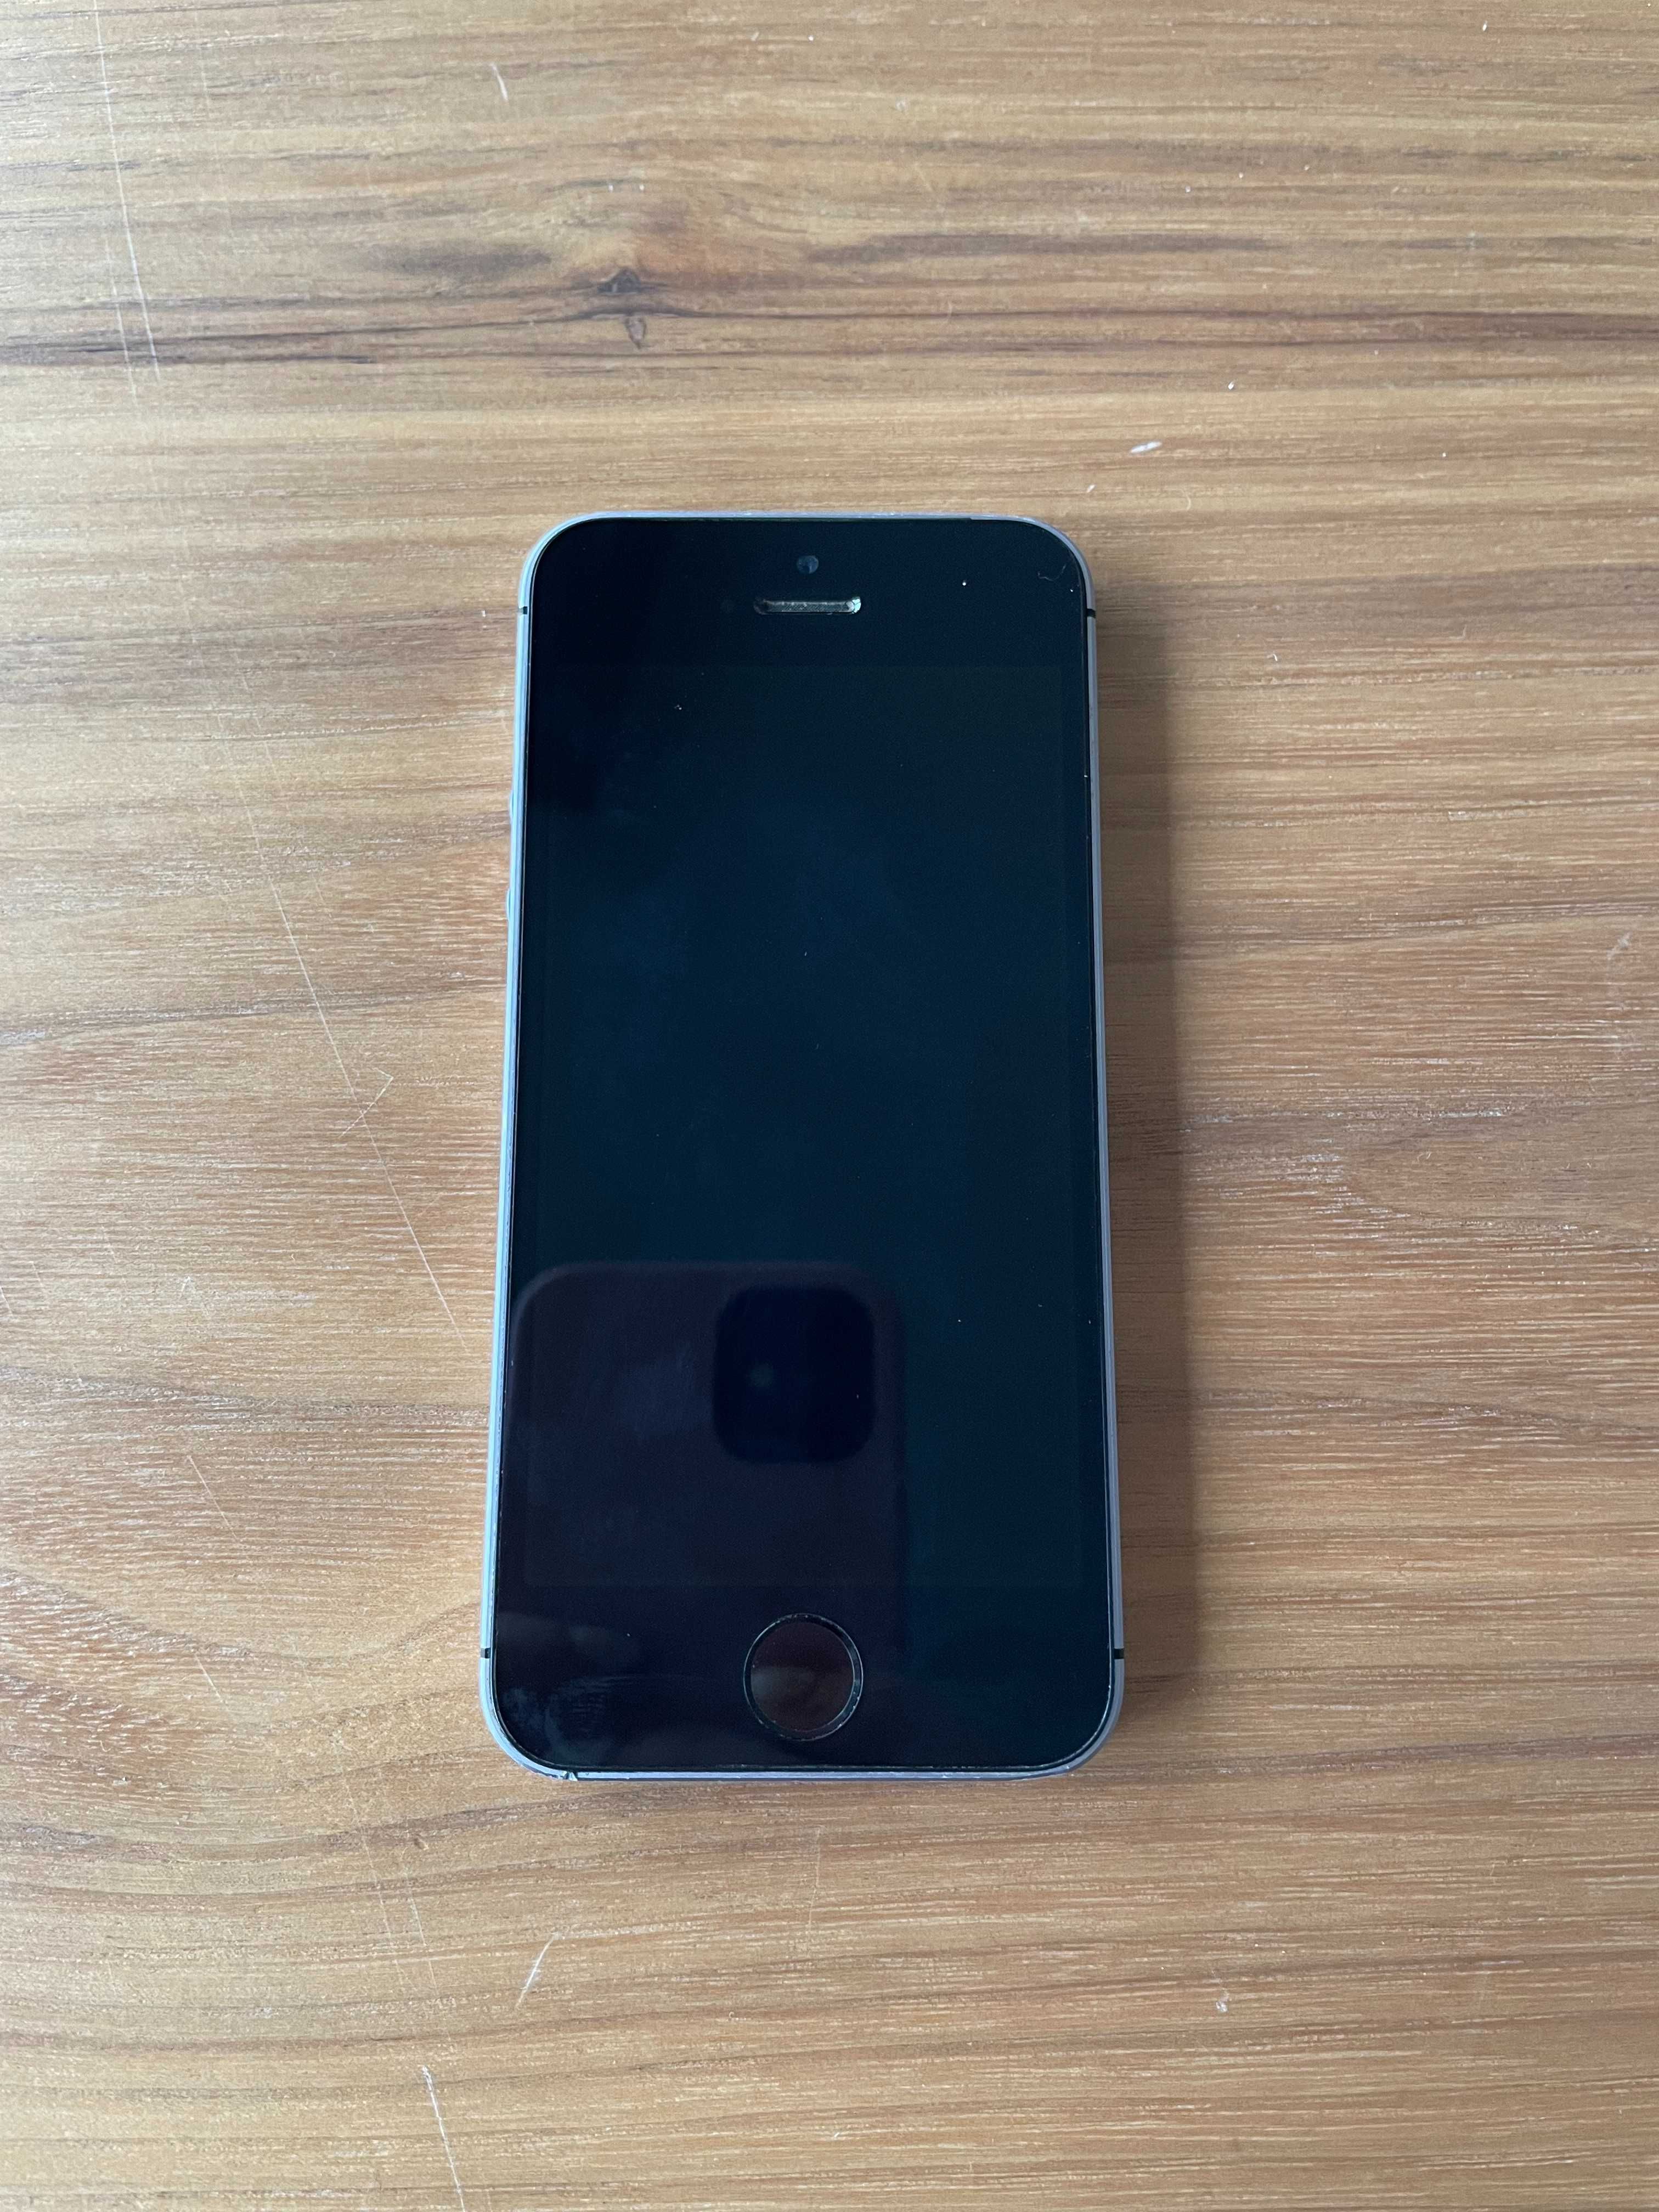 iPhone SE 1st Generation 16GB Space Gray, модел А1723, 2016 година